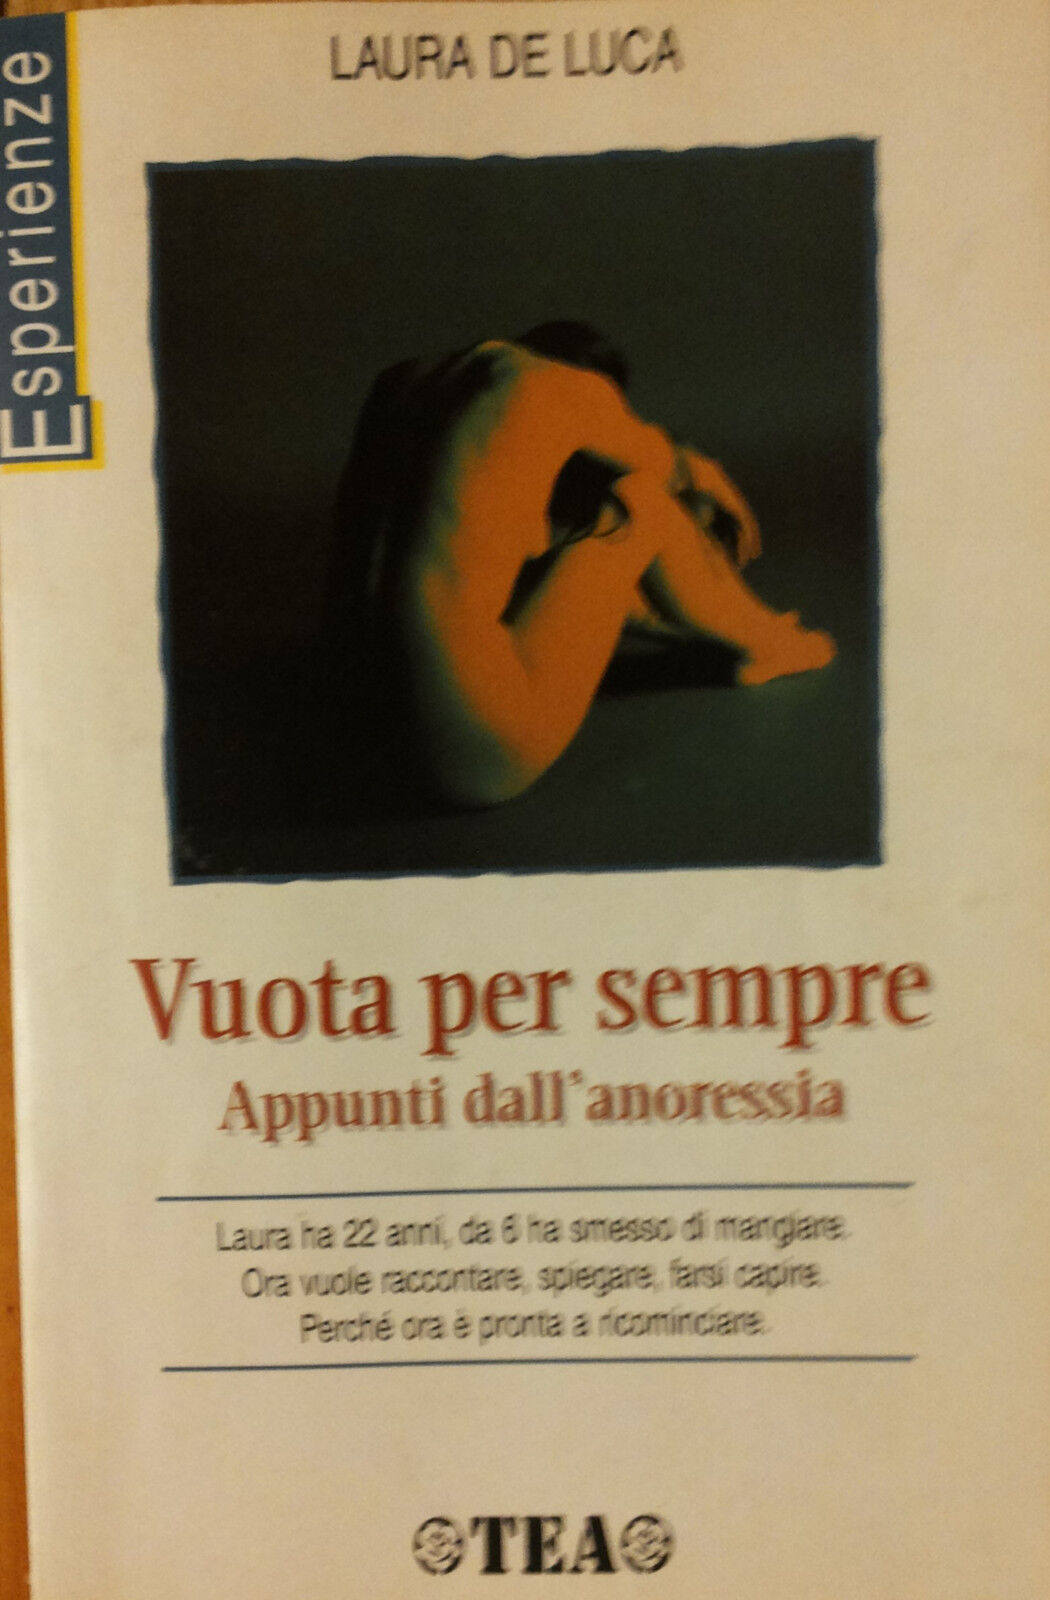 Vuota per sempre appunti dalL'anoressia - De Luca - TEA,1998 - R